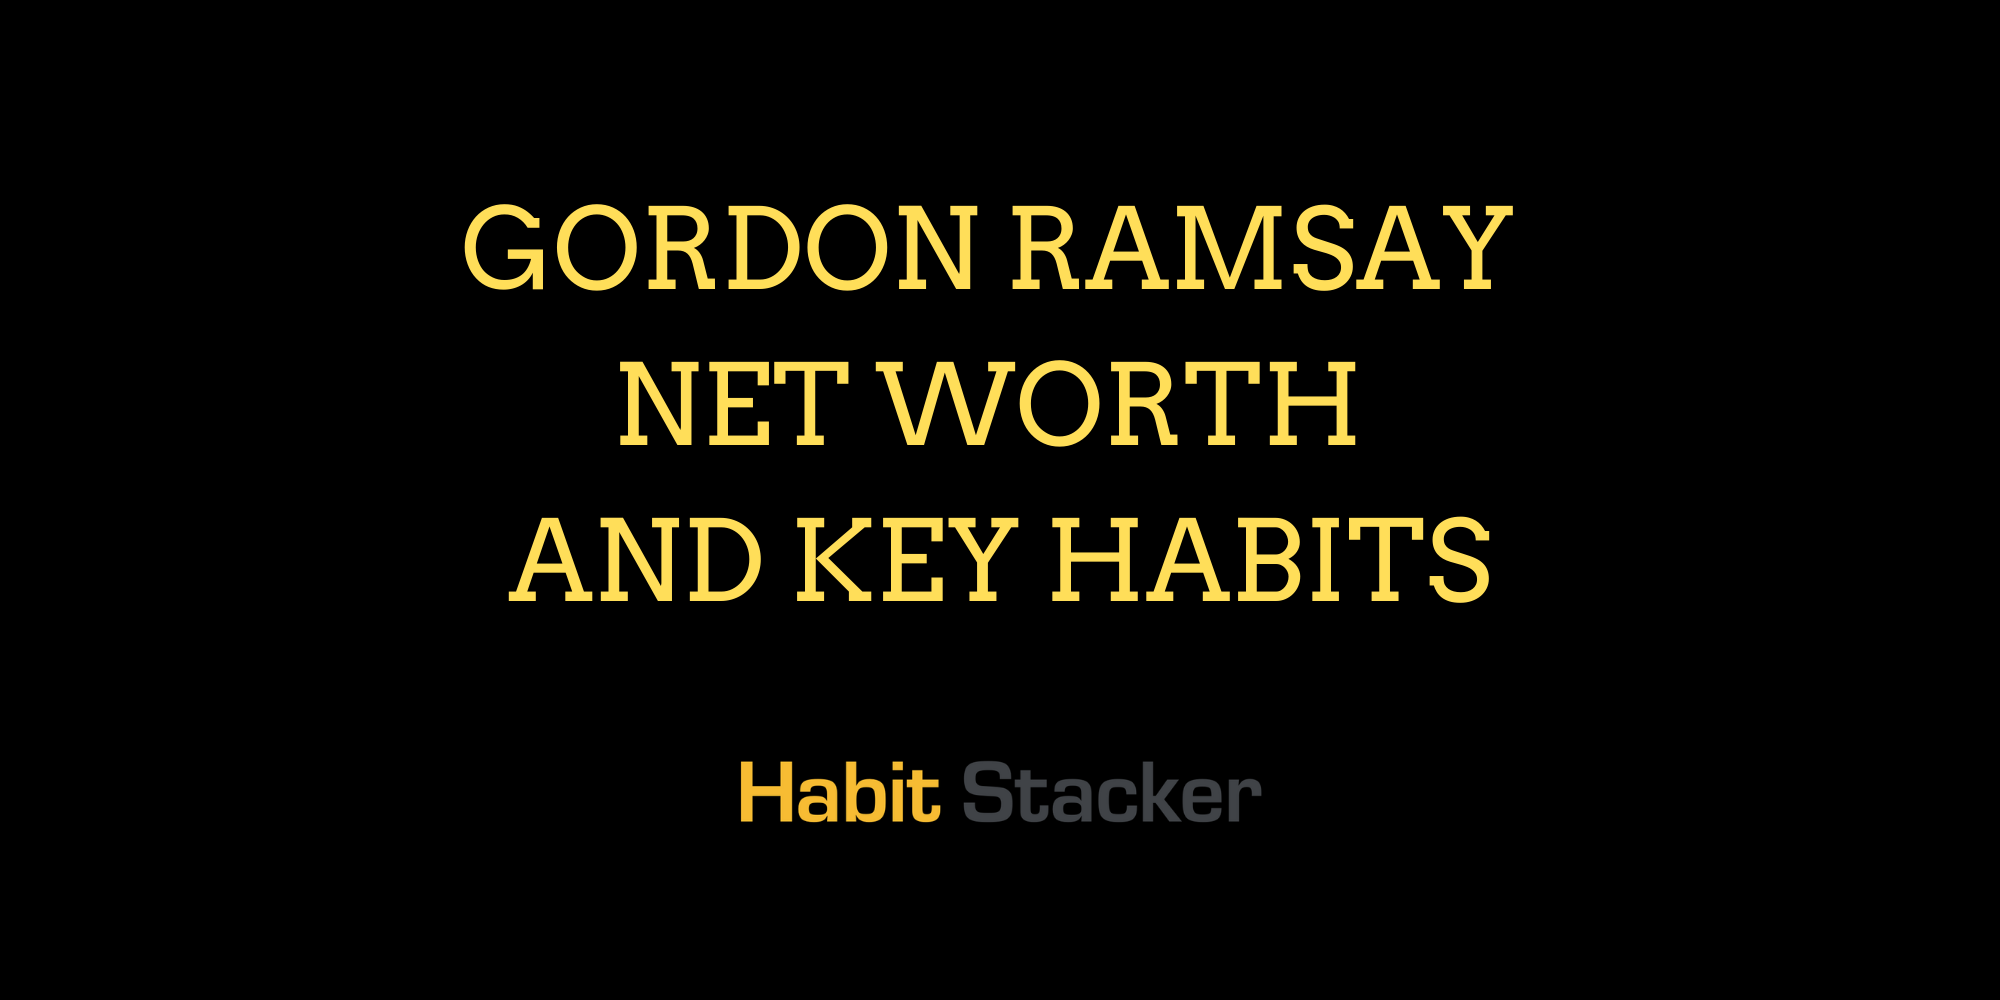 Gordon Ramsay Net Worth and Key Habits